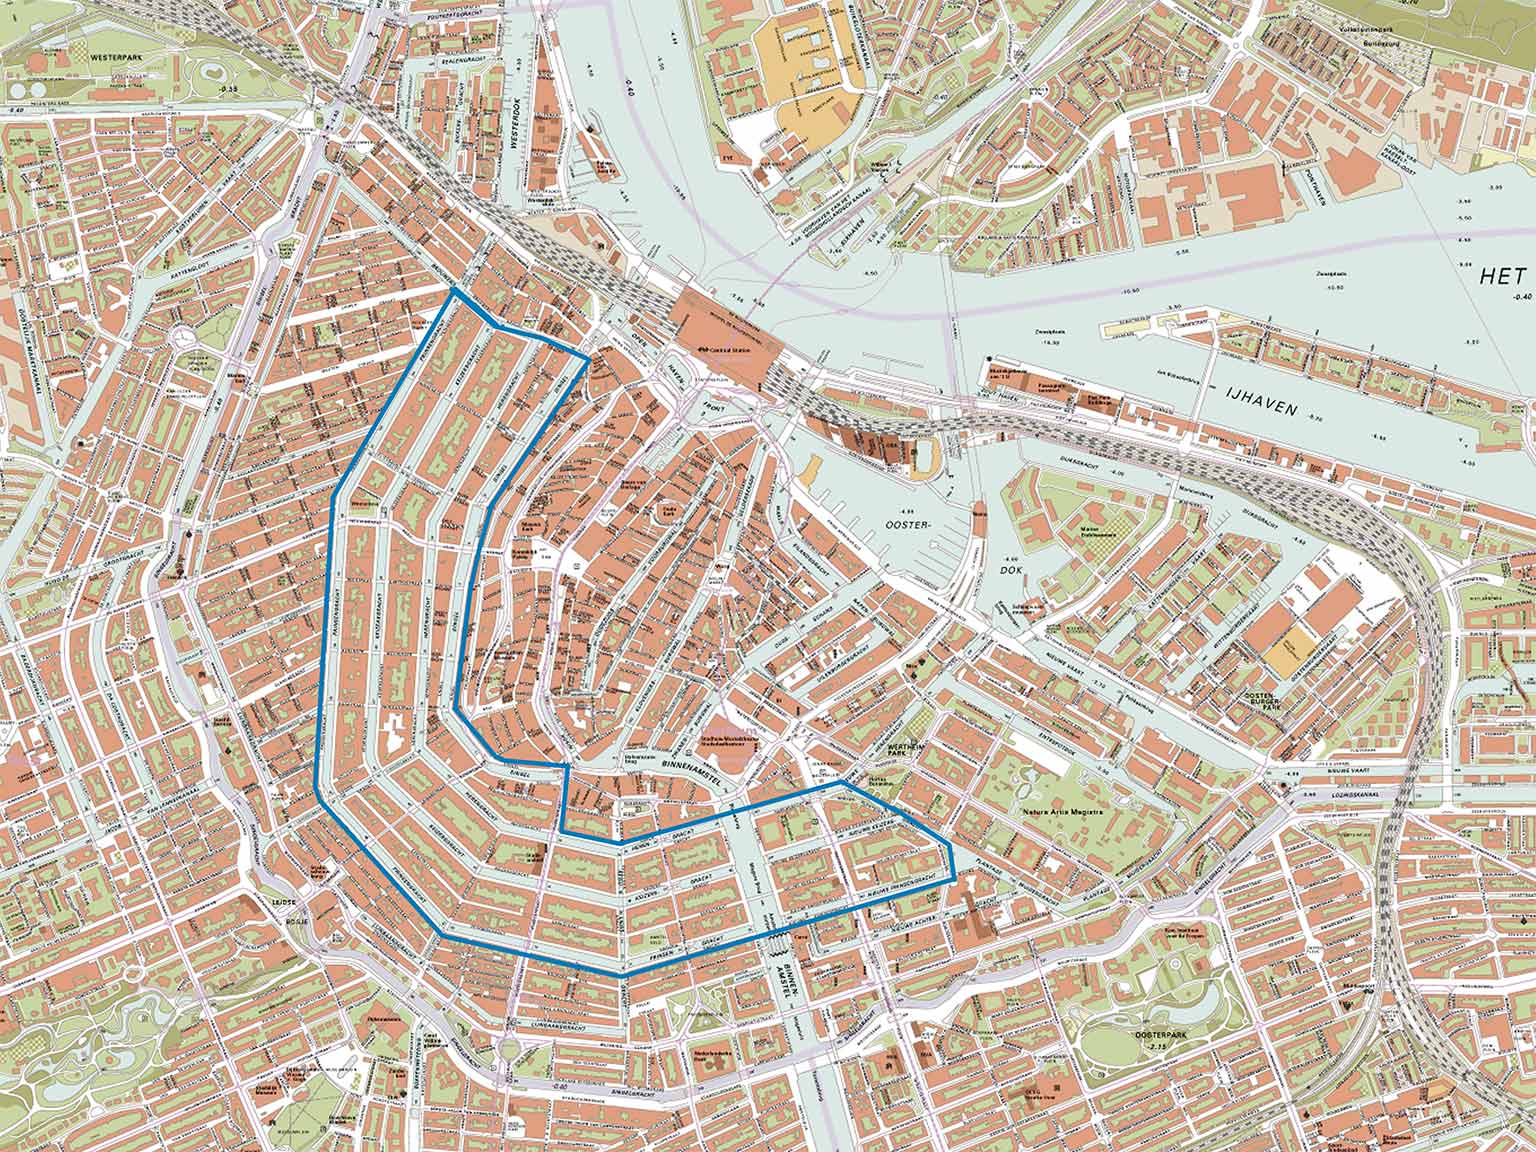 Amsterdam’s Canal Belt (Grachtengordel) marked on the map